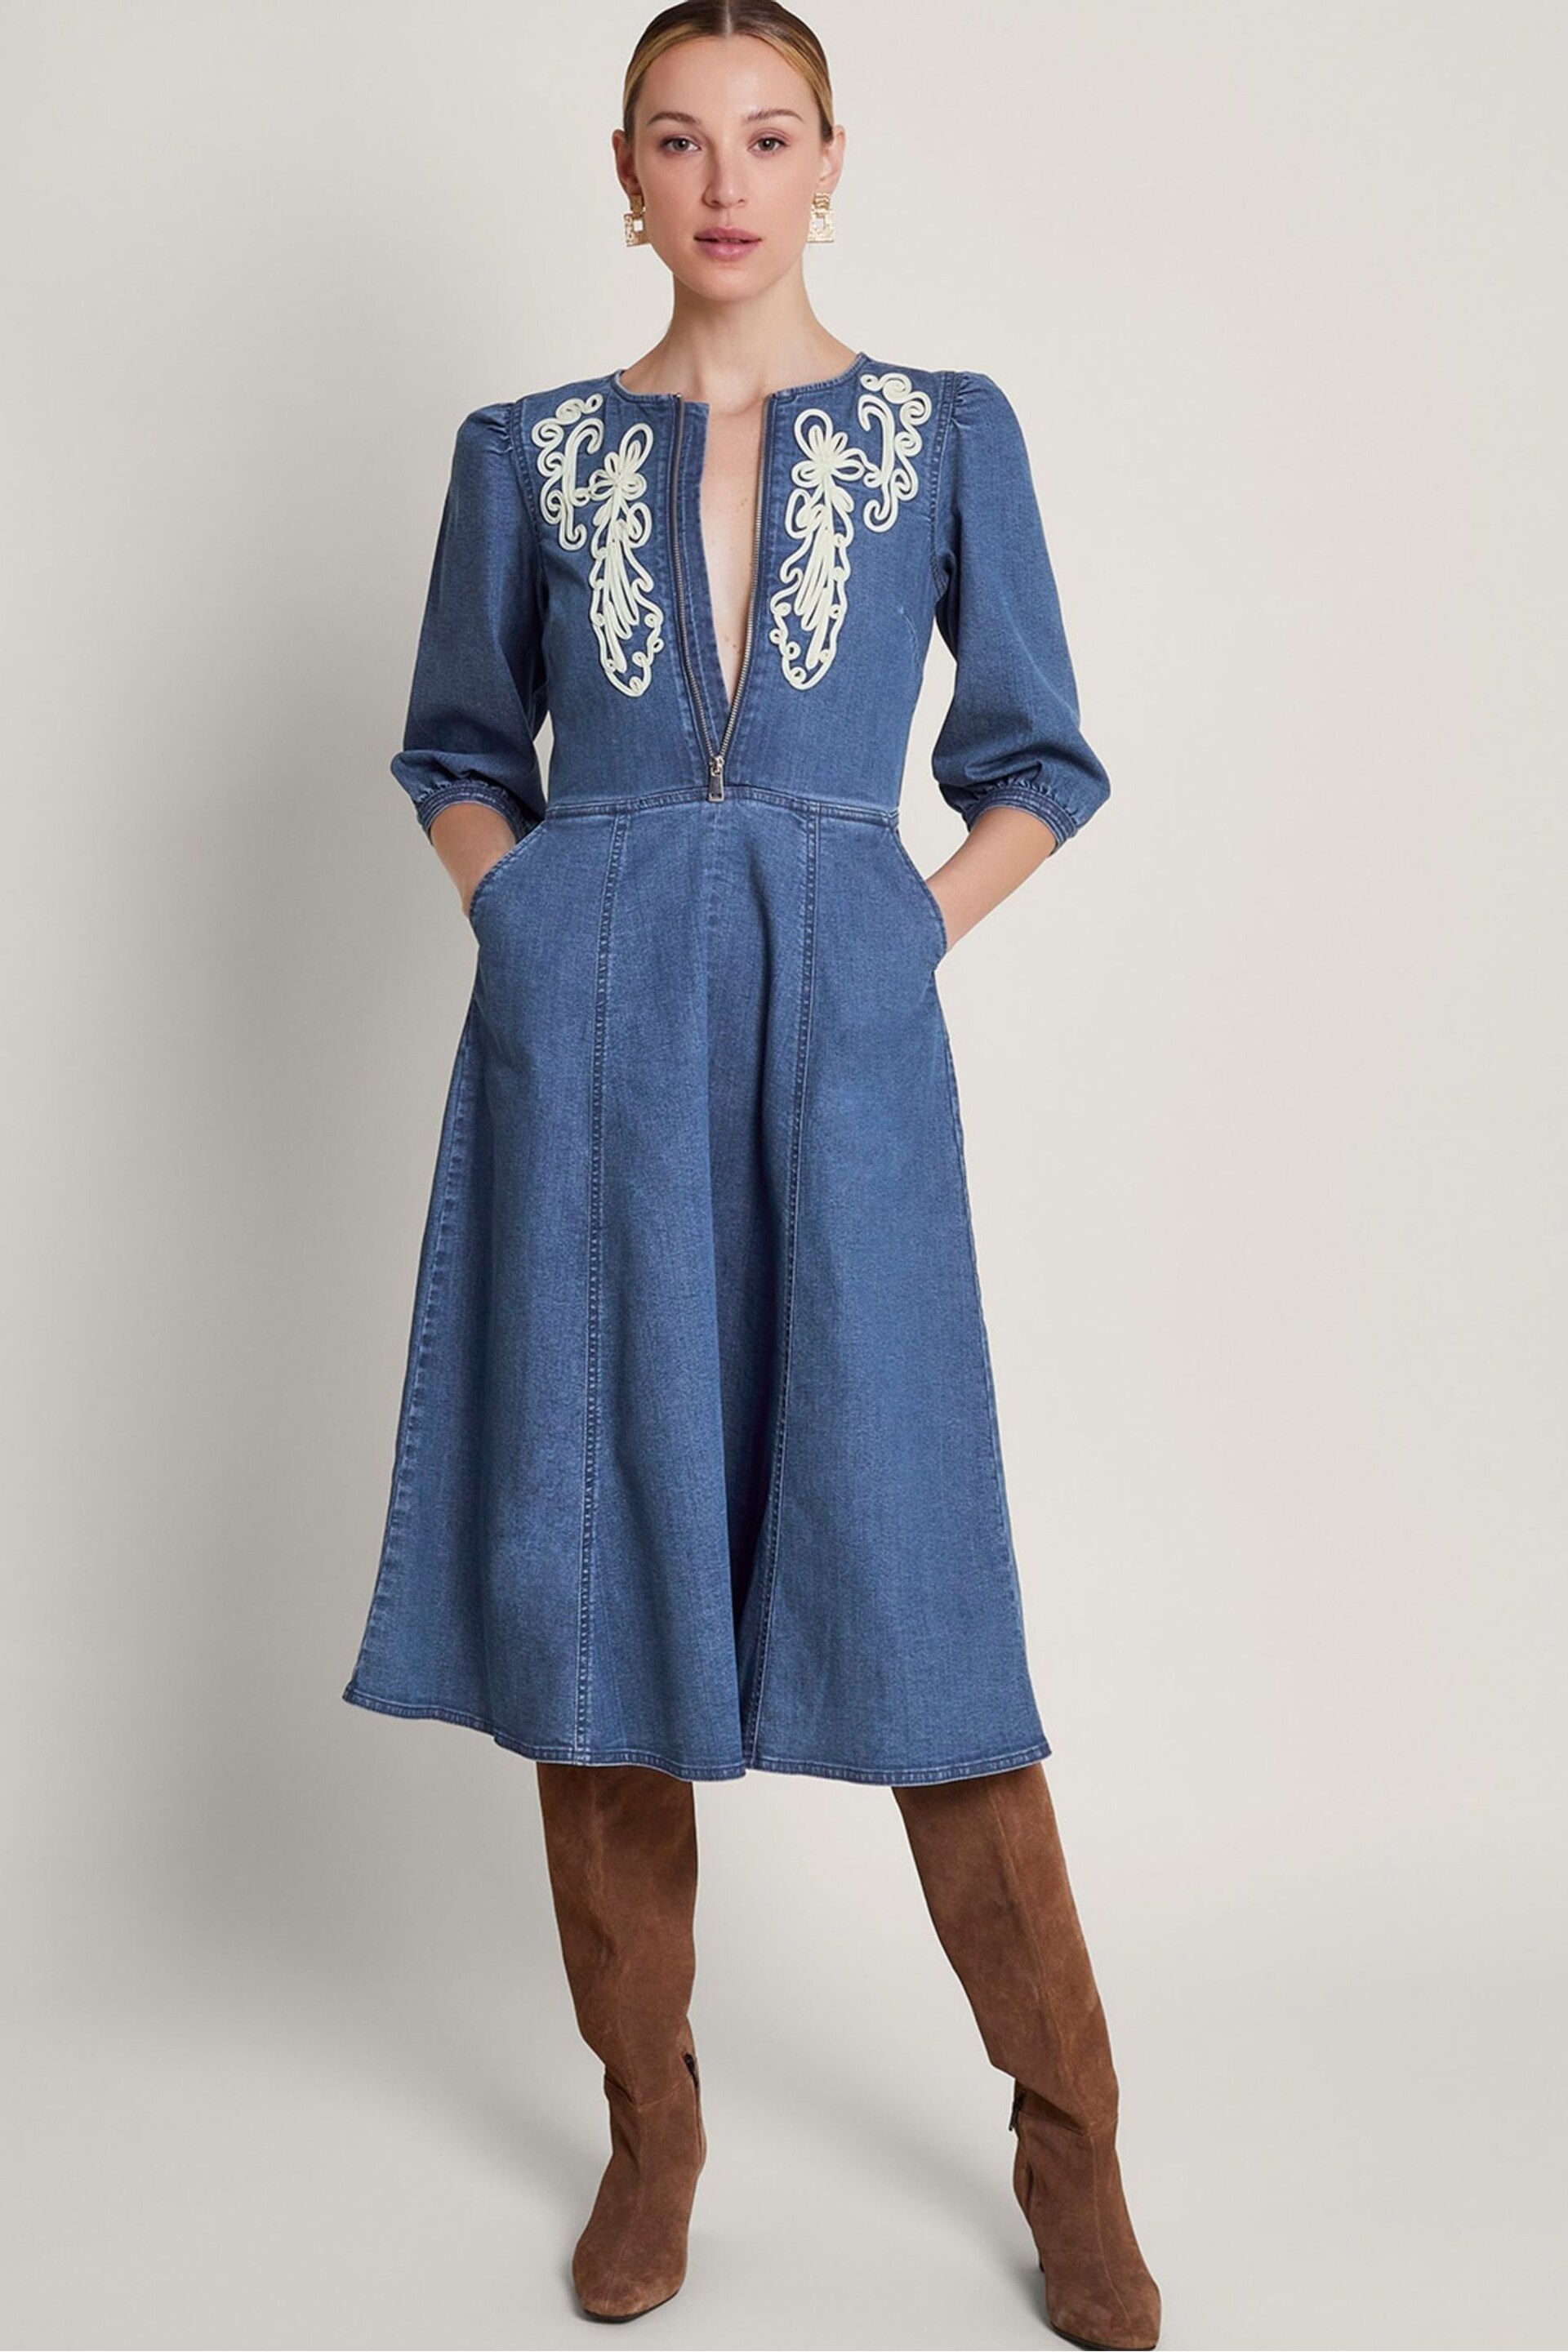 Monsoon Blue Kaia Cornelli Dress - Image 2 of 6